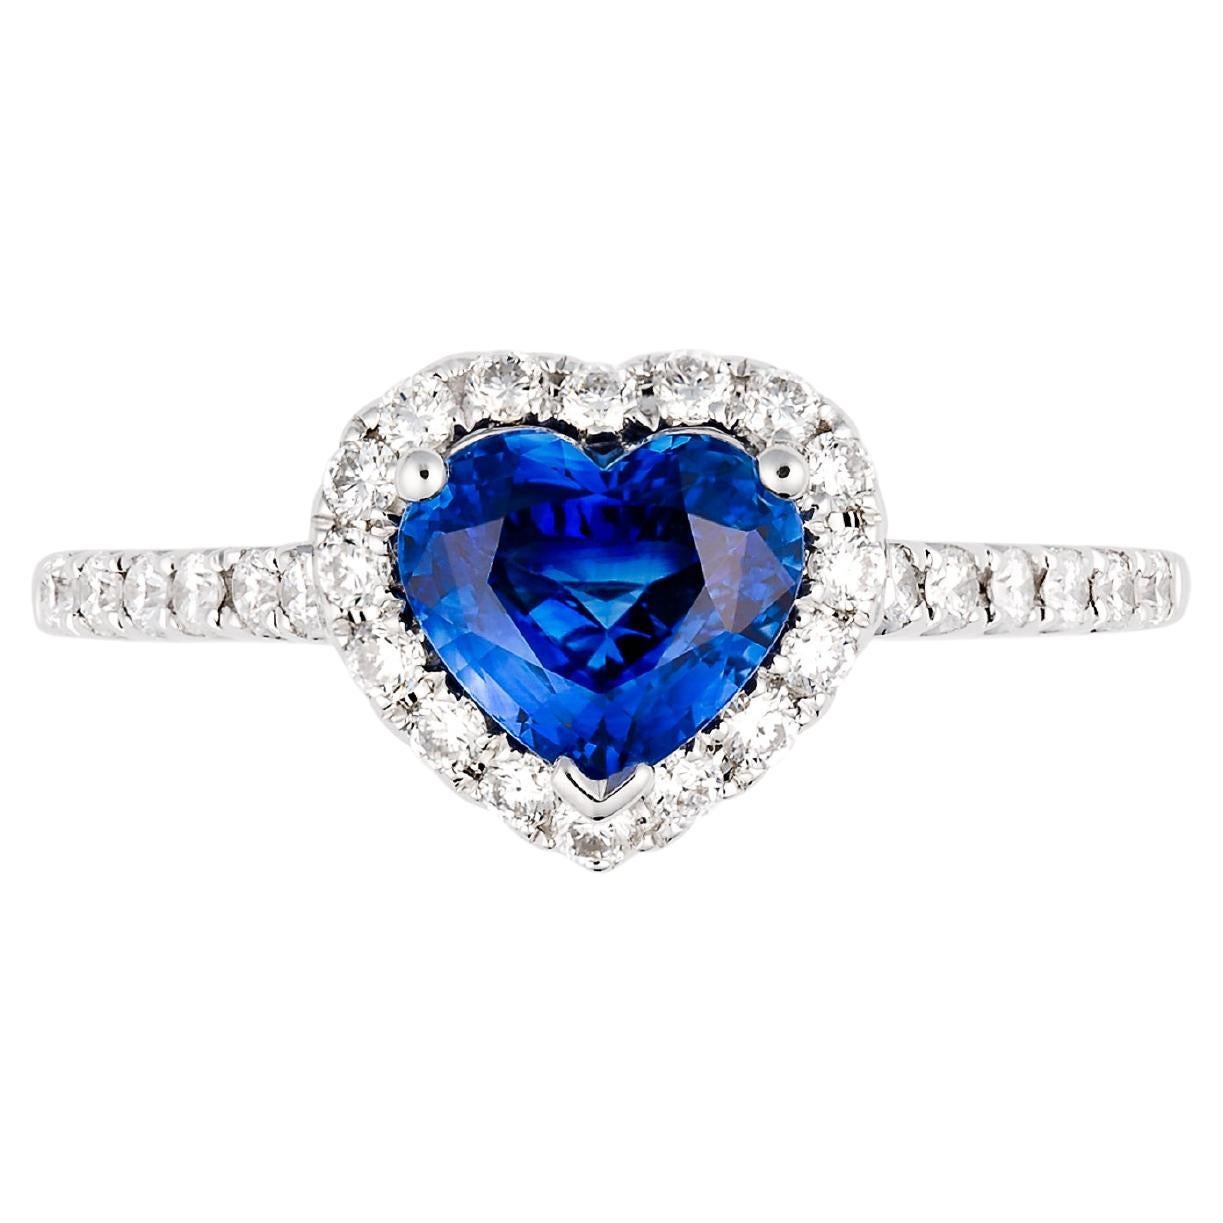 Fancy 1.203ct Heart- Shaped Kashmir Blue Sapphire and Diamond Ring